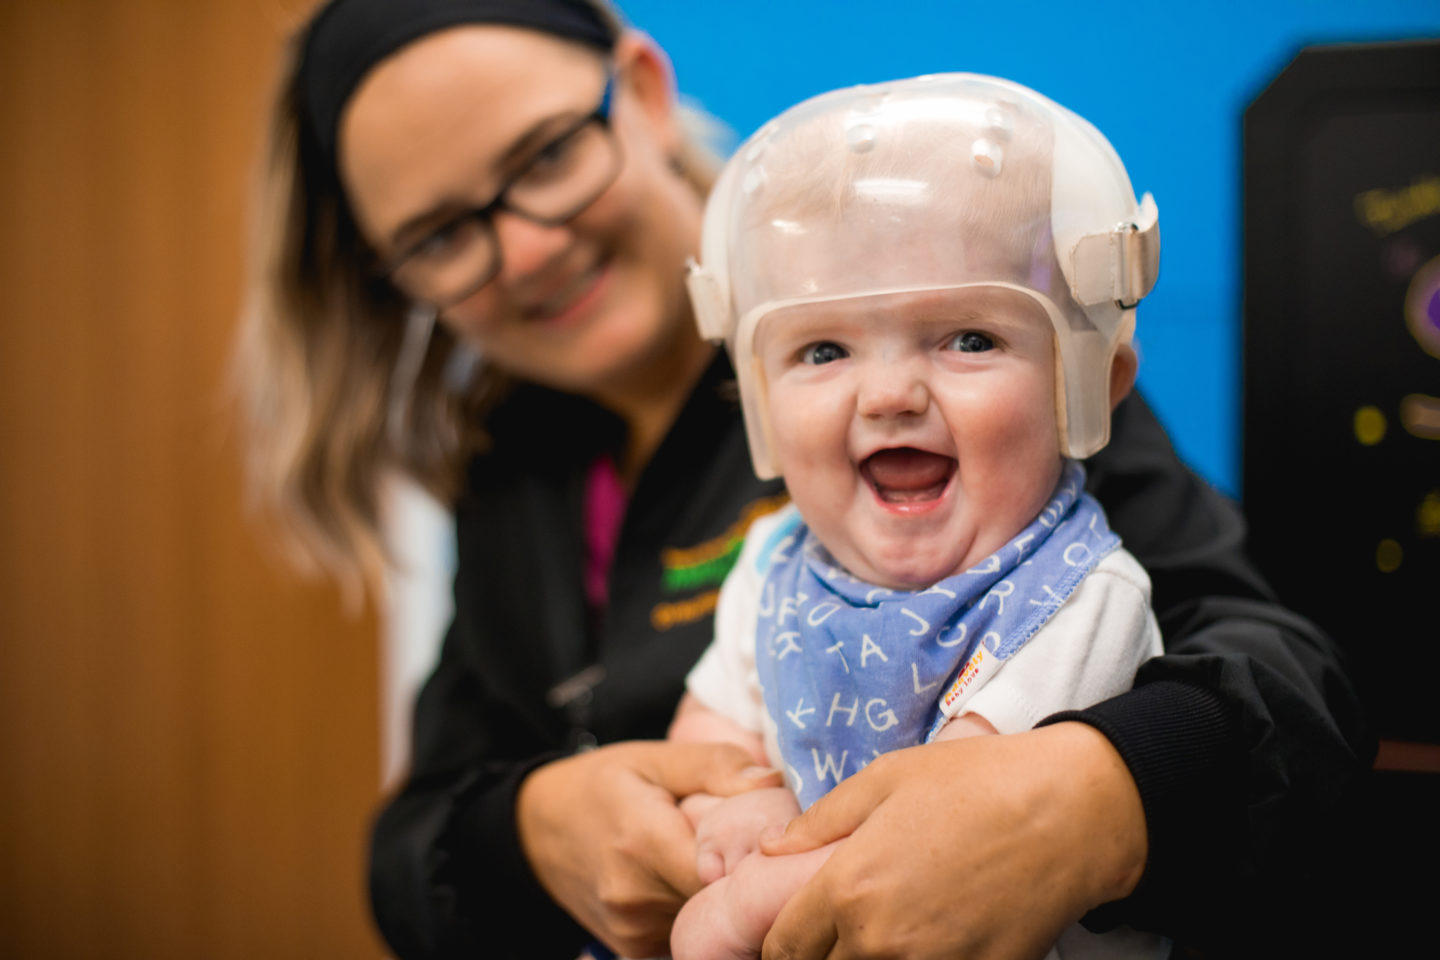 Cranial molding - baby helmets